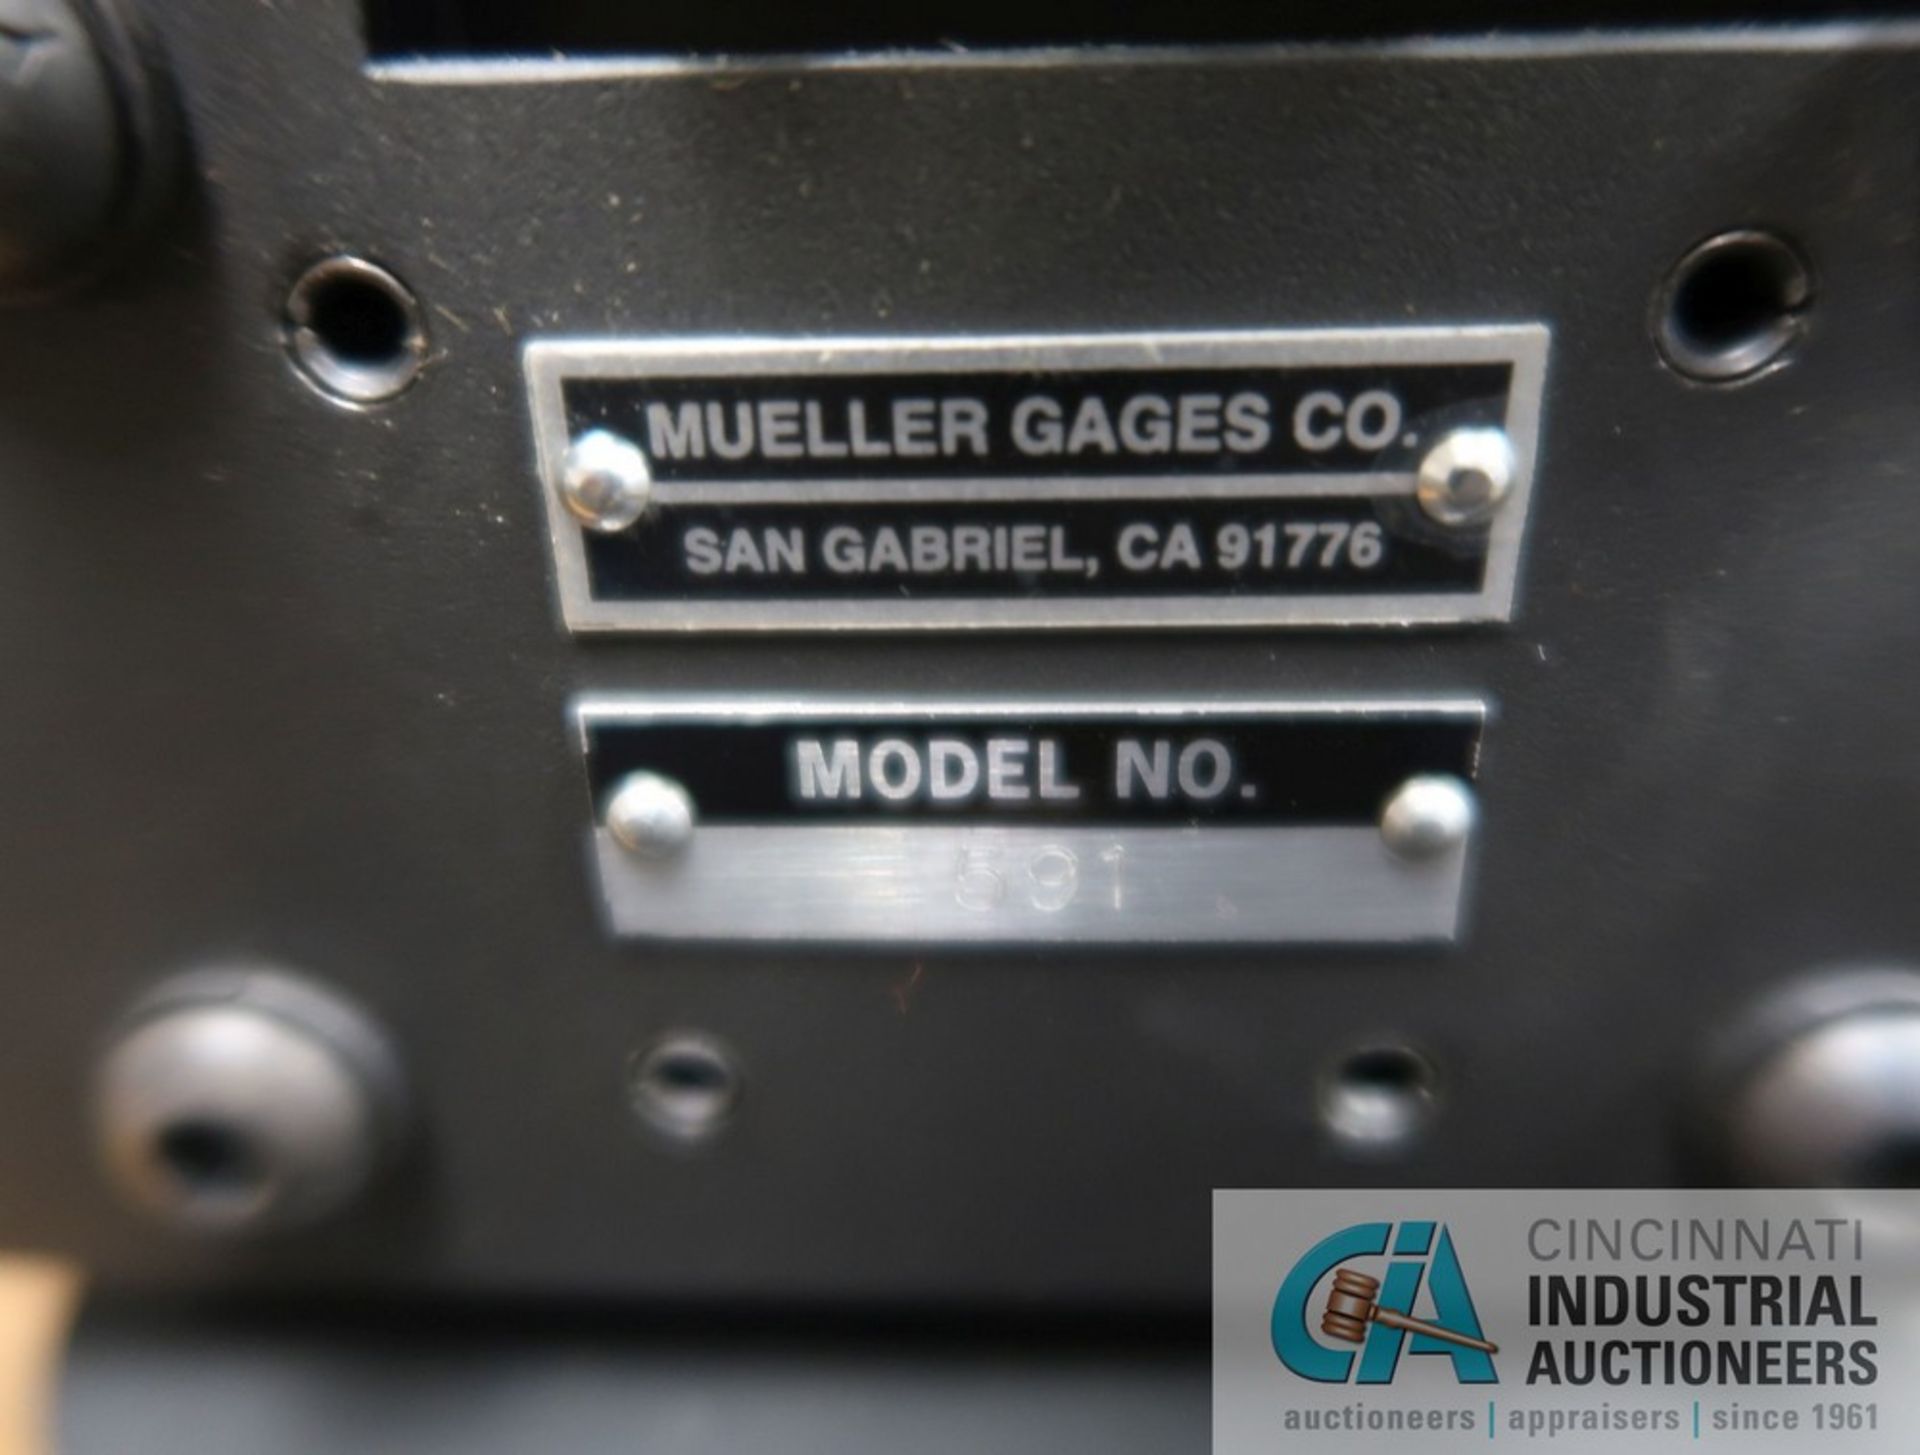 MUELLER GAGE CO. MODEL 591 12" - 18" INSIDE AND OUTSIDE DIAMETER RANGE SET GAGE, 0-1" DEPTH RANGE - Image 3 of 4